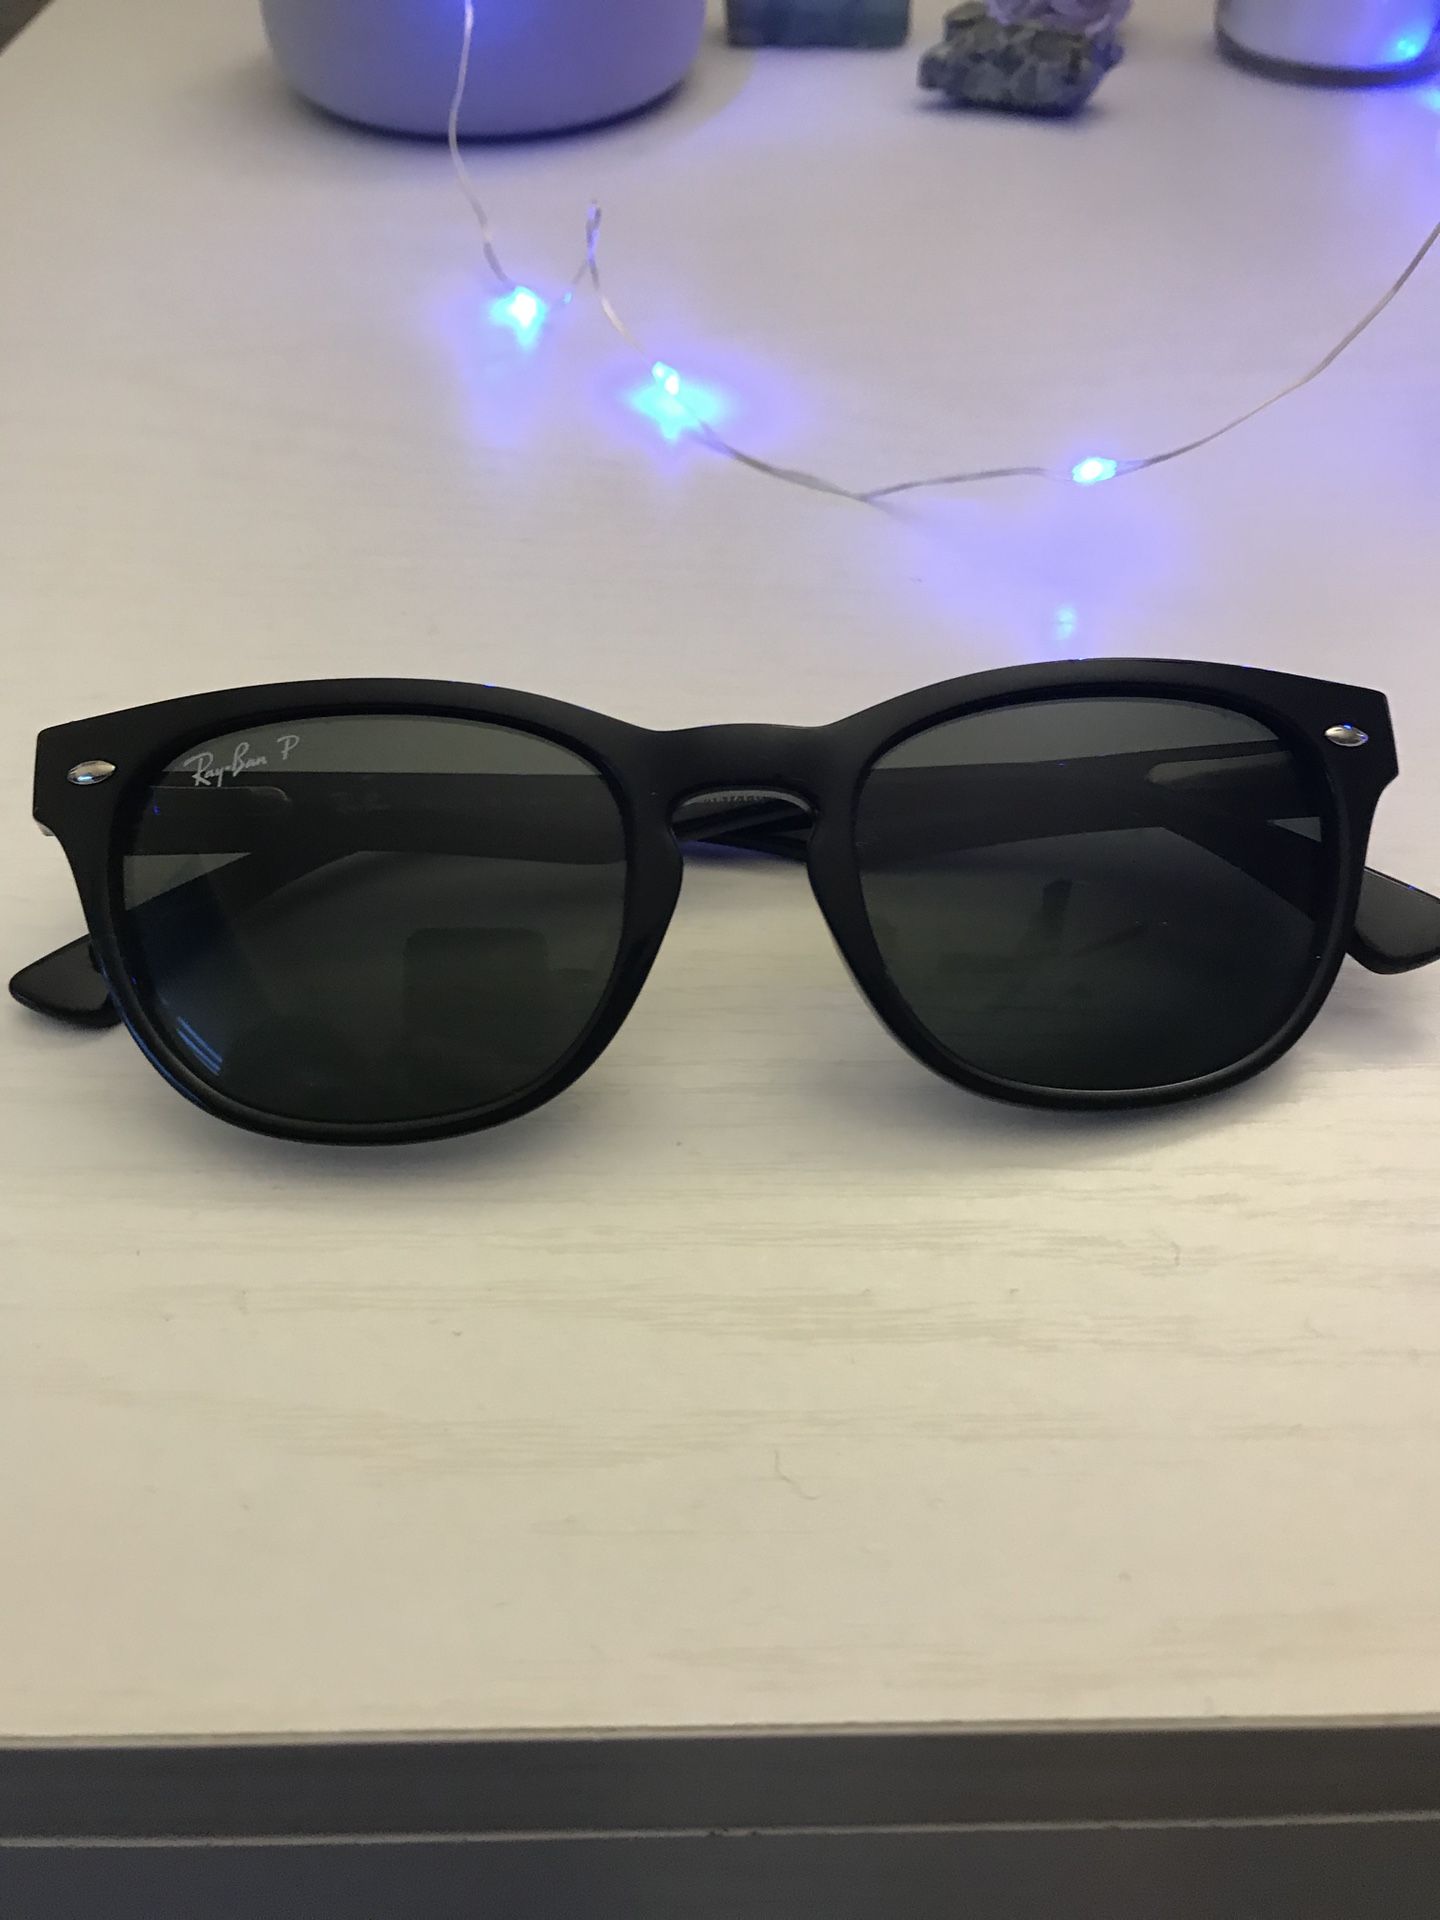 RayBan Polarized Sunglasses